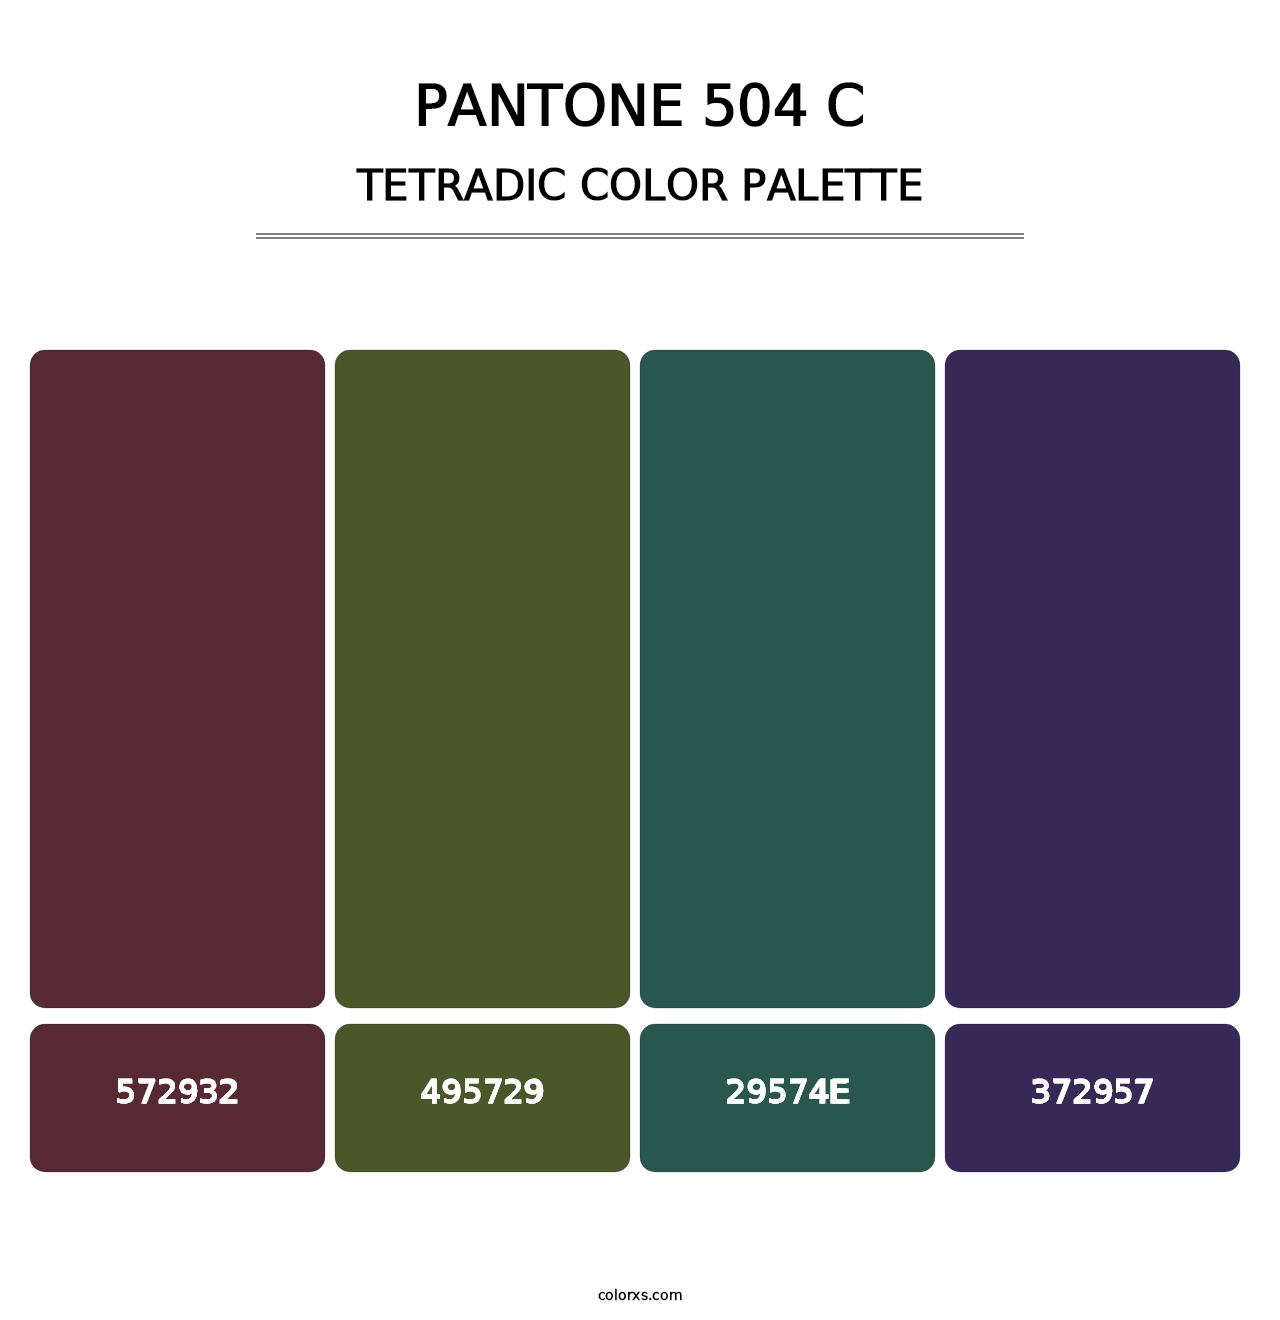 PANTONE 504 C - Tetradic Color Palette